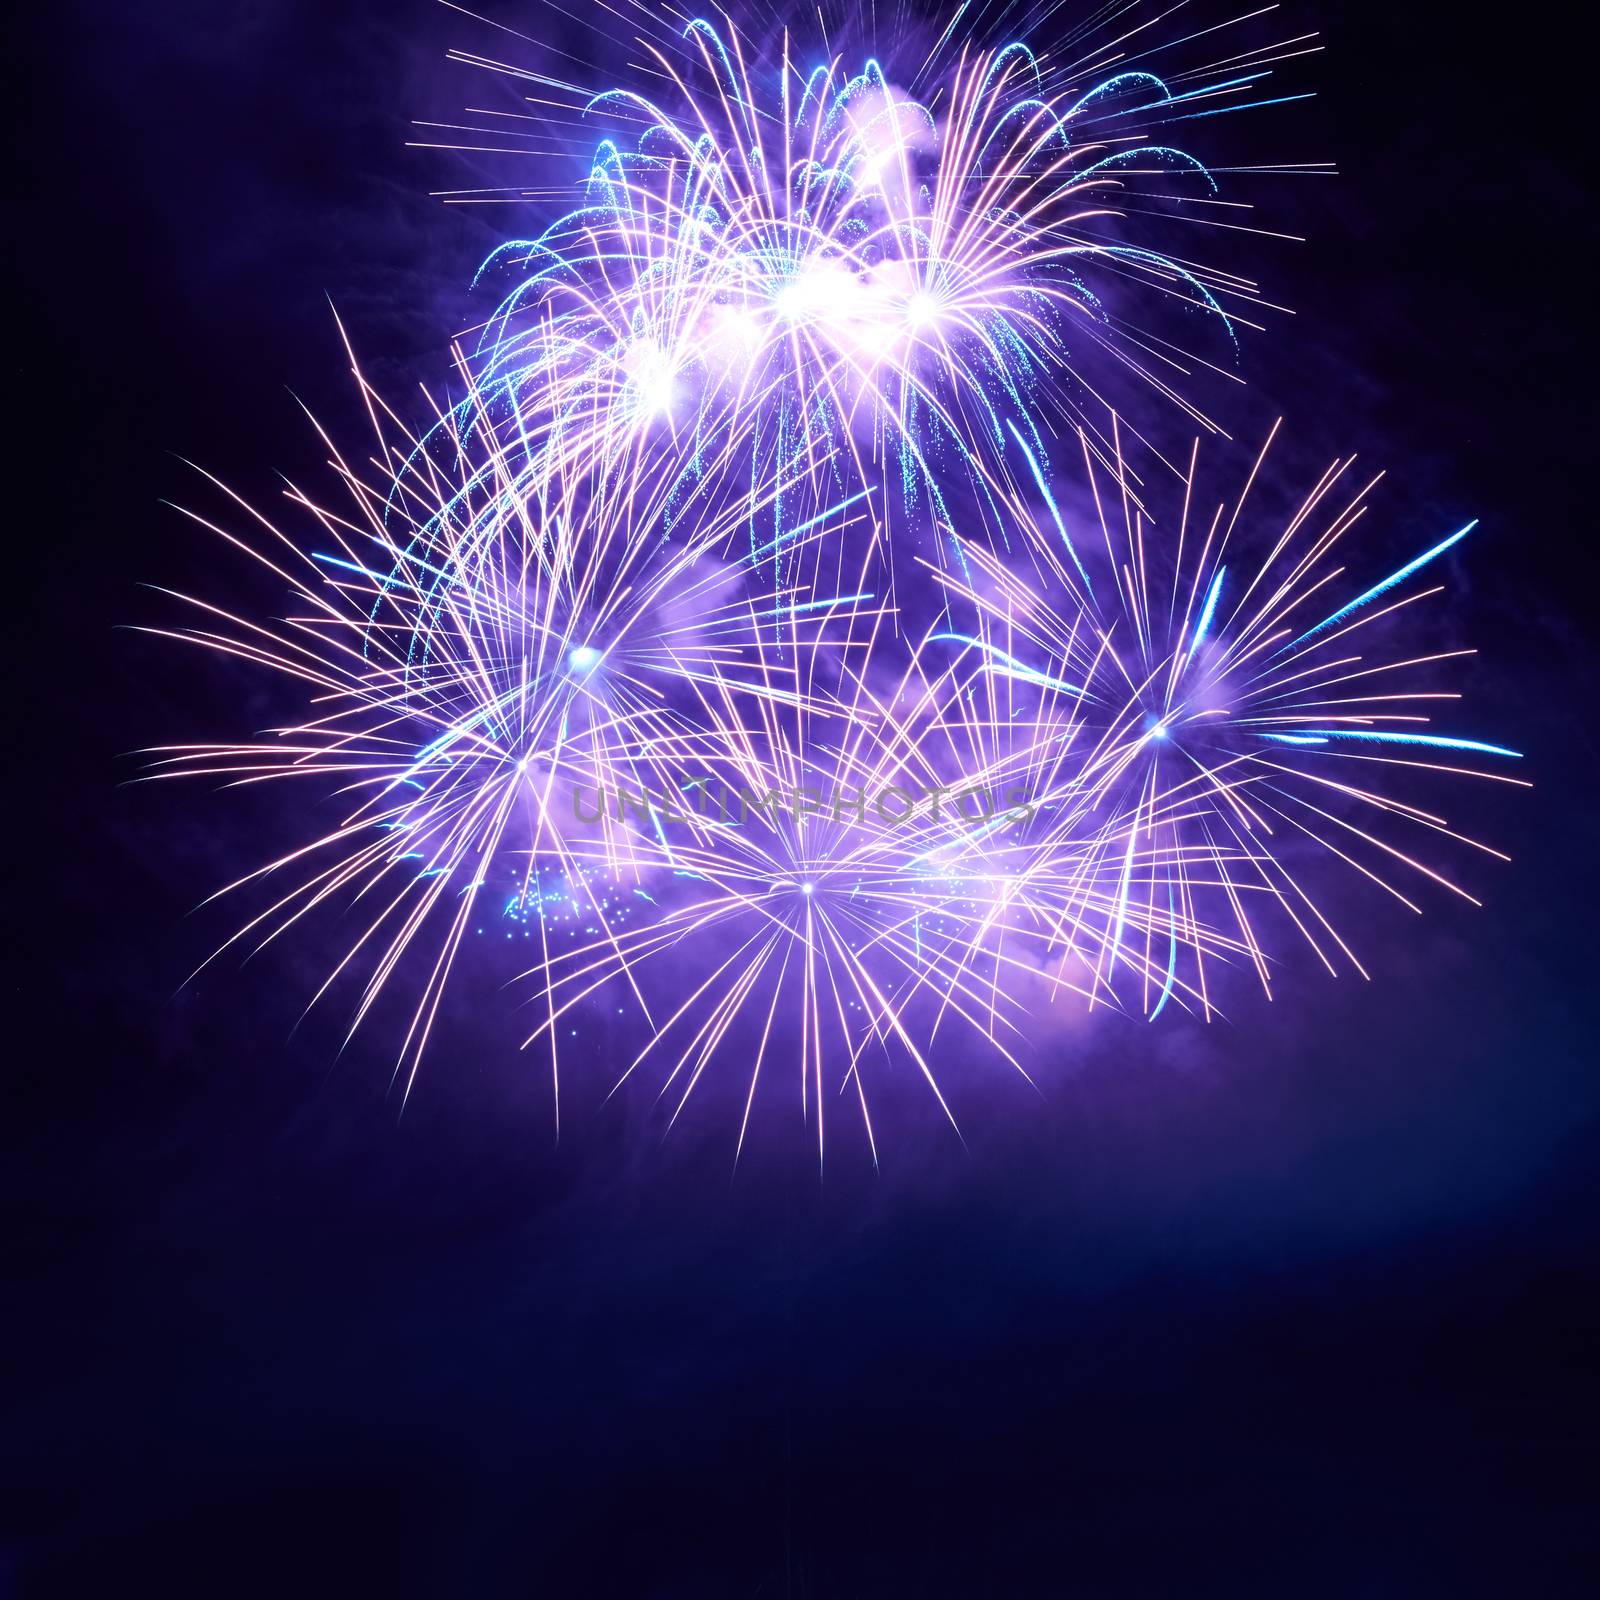 Сolorful fireworks by vapi